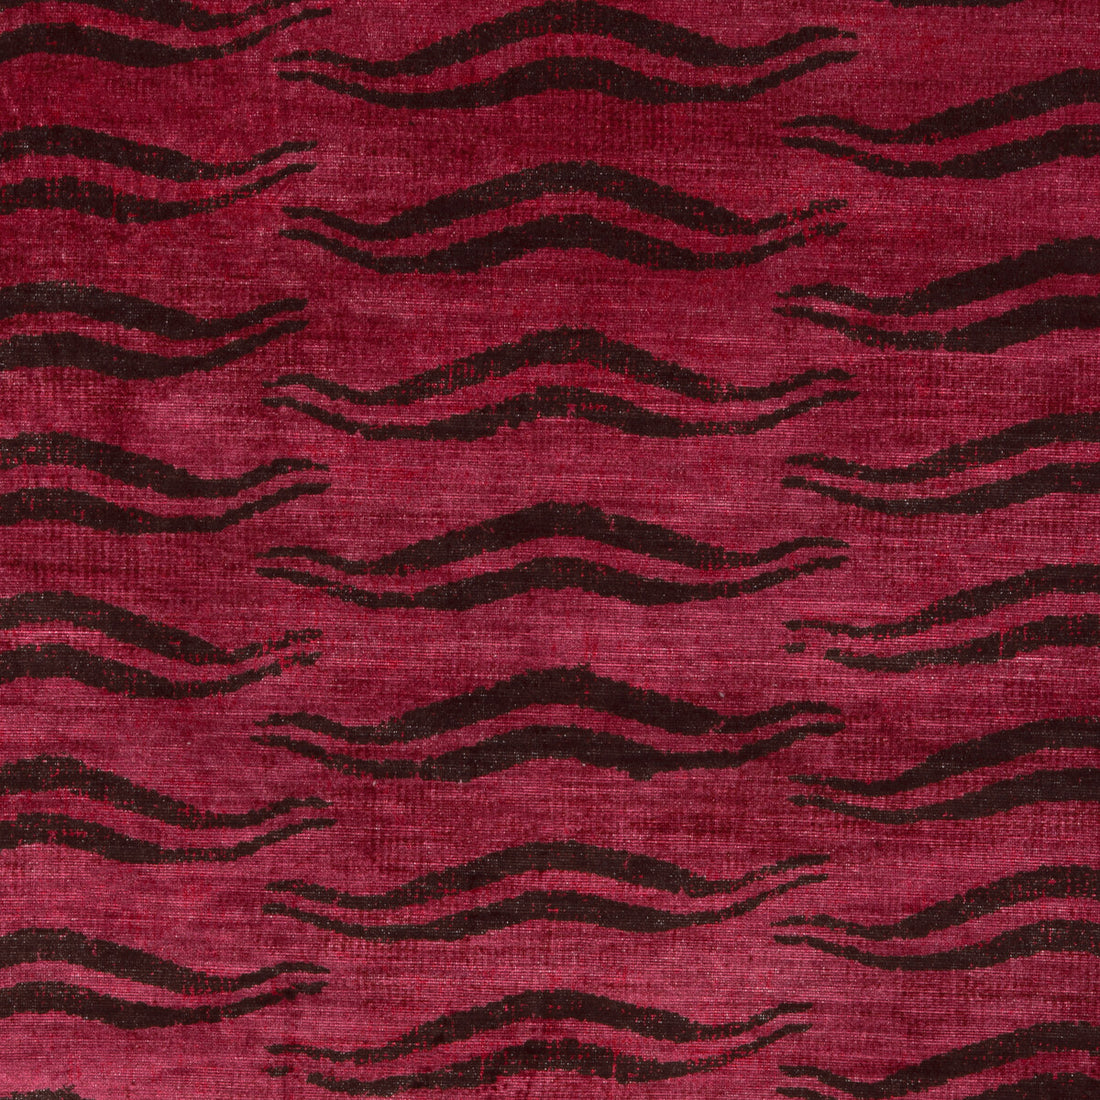 Beckett Velvet fabric in garnet color - pattern 2023115.9.0 - by Lee Jofa in the Barwick Velvets collection